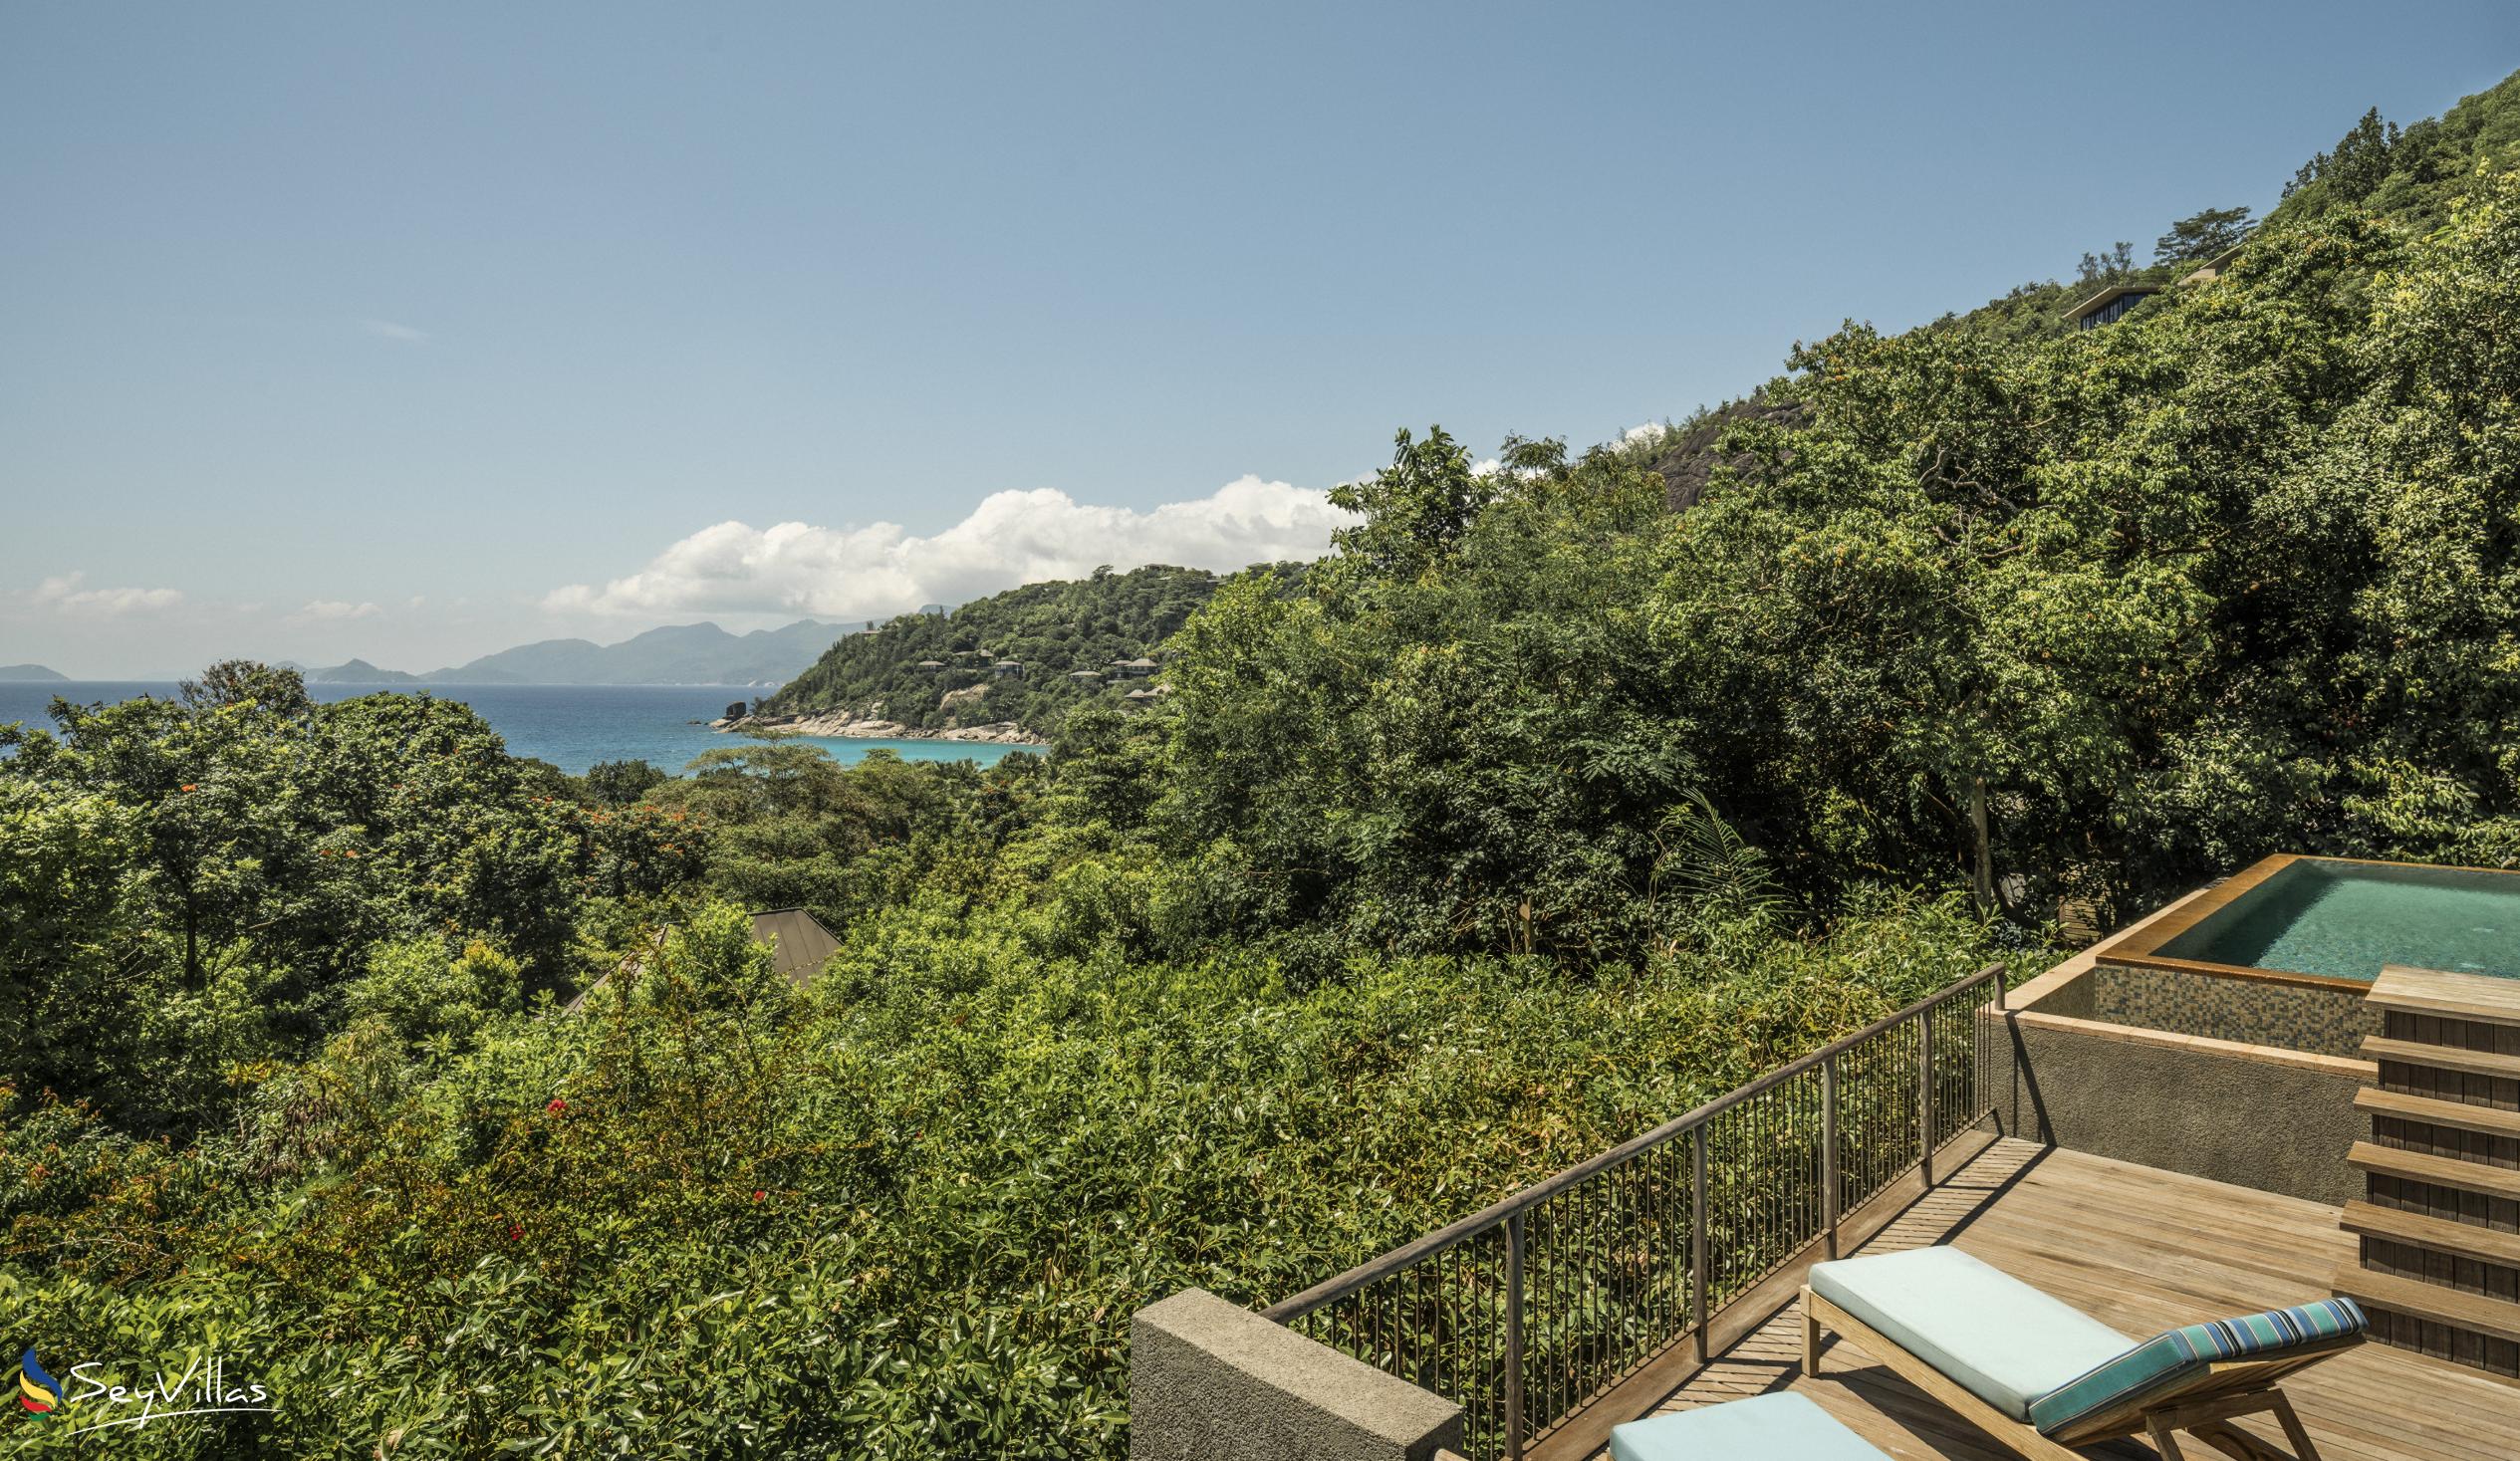 Foto 34: Four Seasons Resort - Ocean View Villa - Mahé (Seychellen)